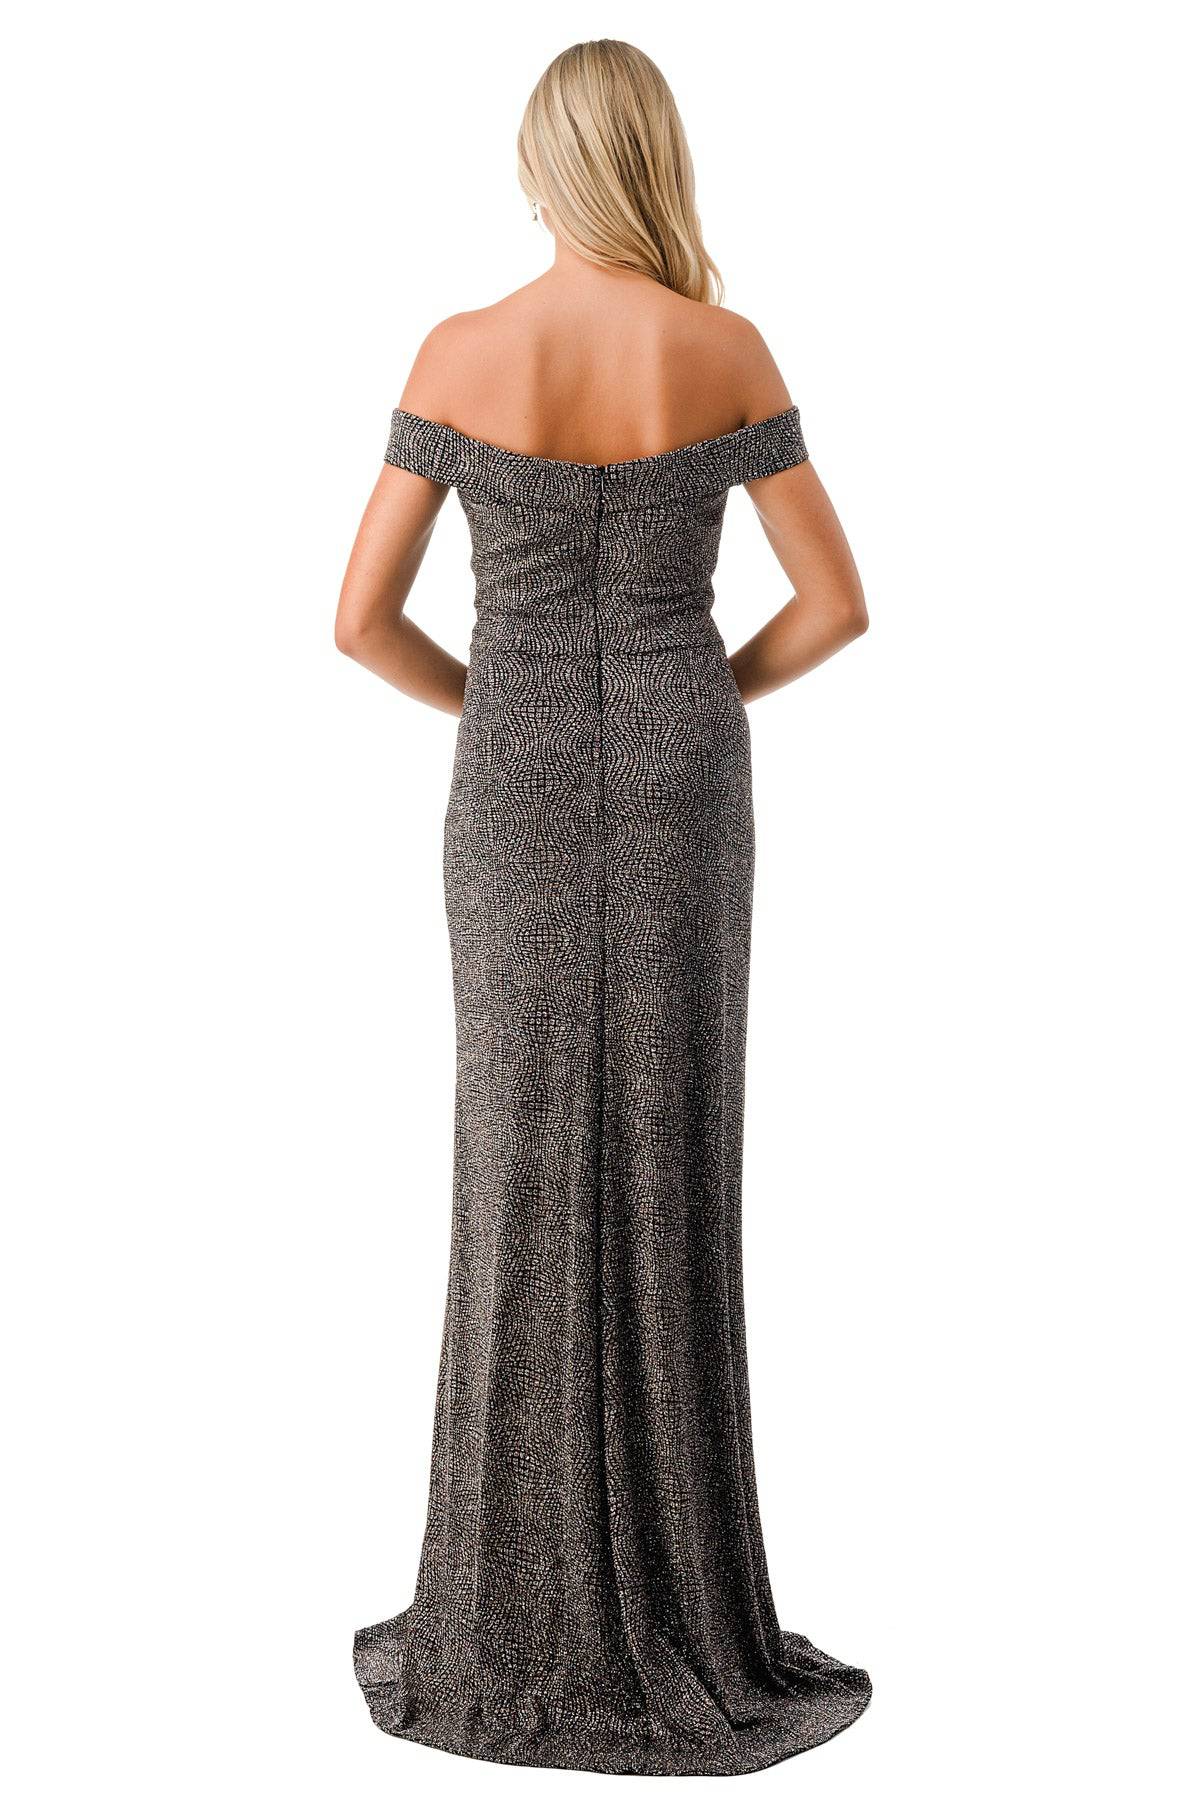 Aspeed Design D574 Metallic Off Shoulder Dress - NORMA REED